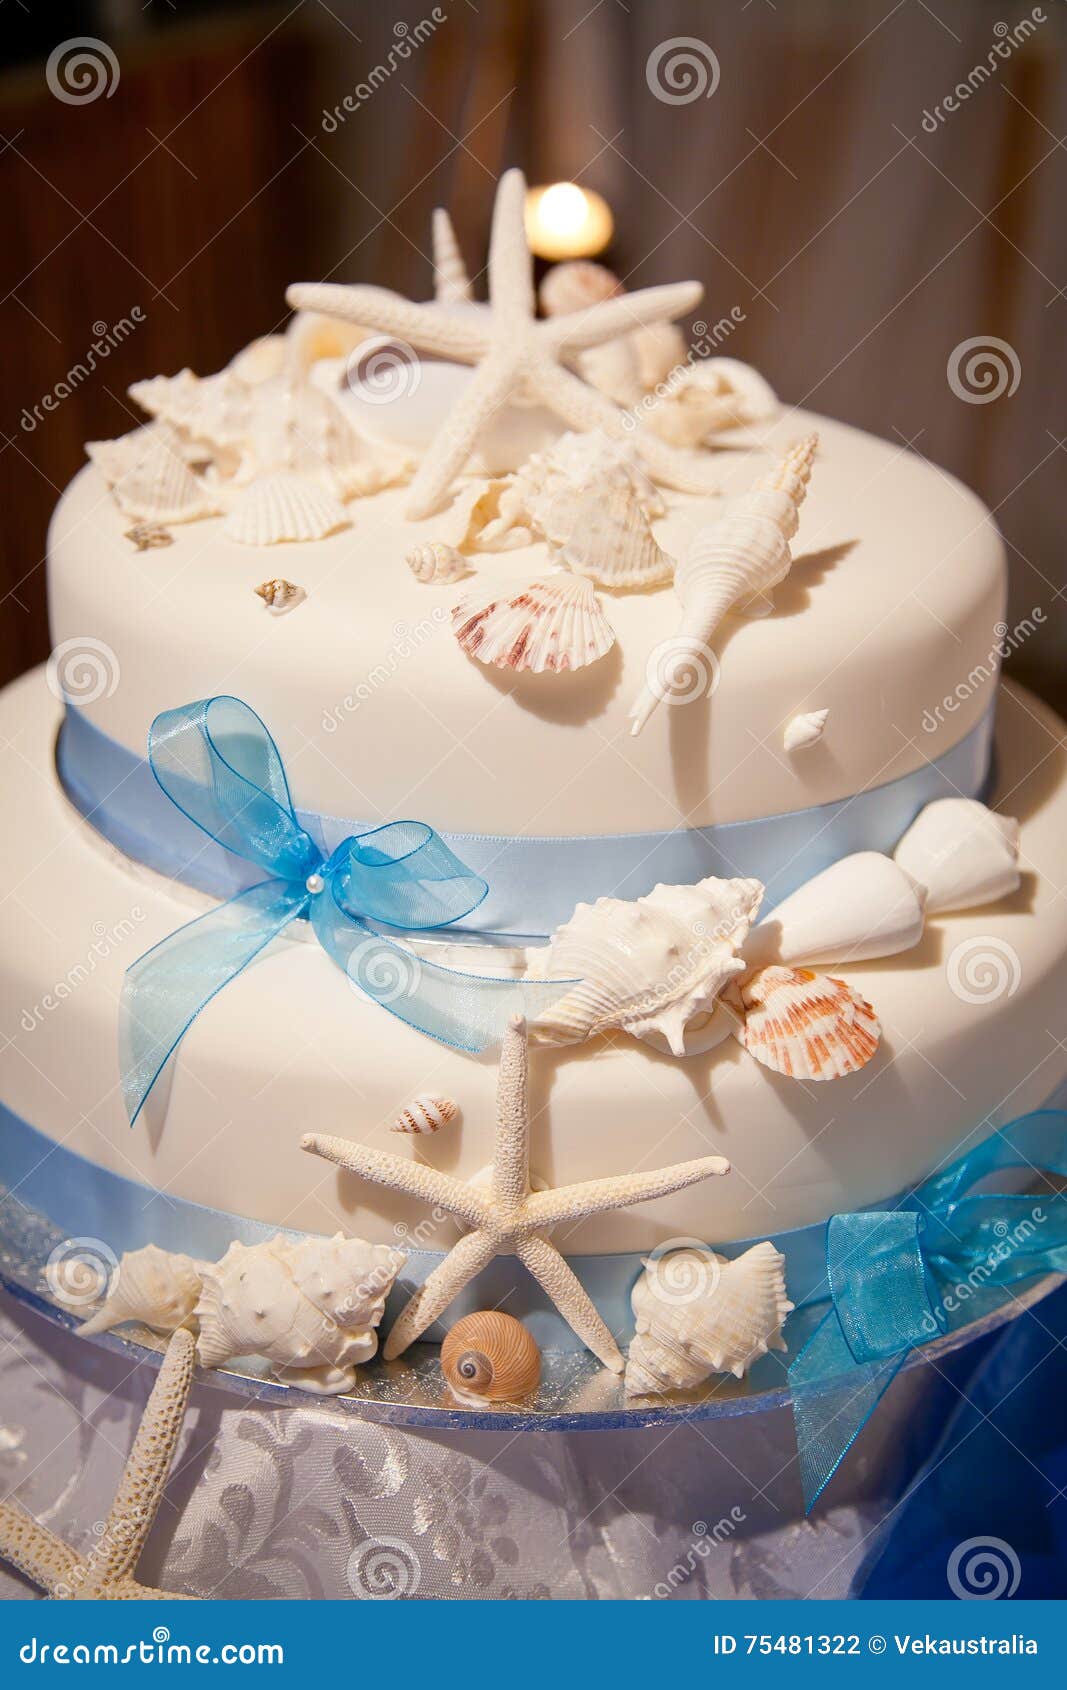 Beach Theme Wedding Cake With Starfish And Shells Stock Photo